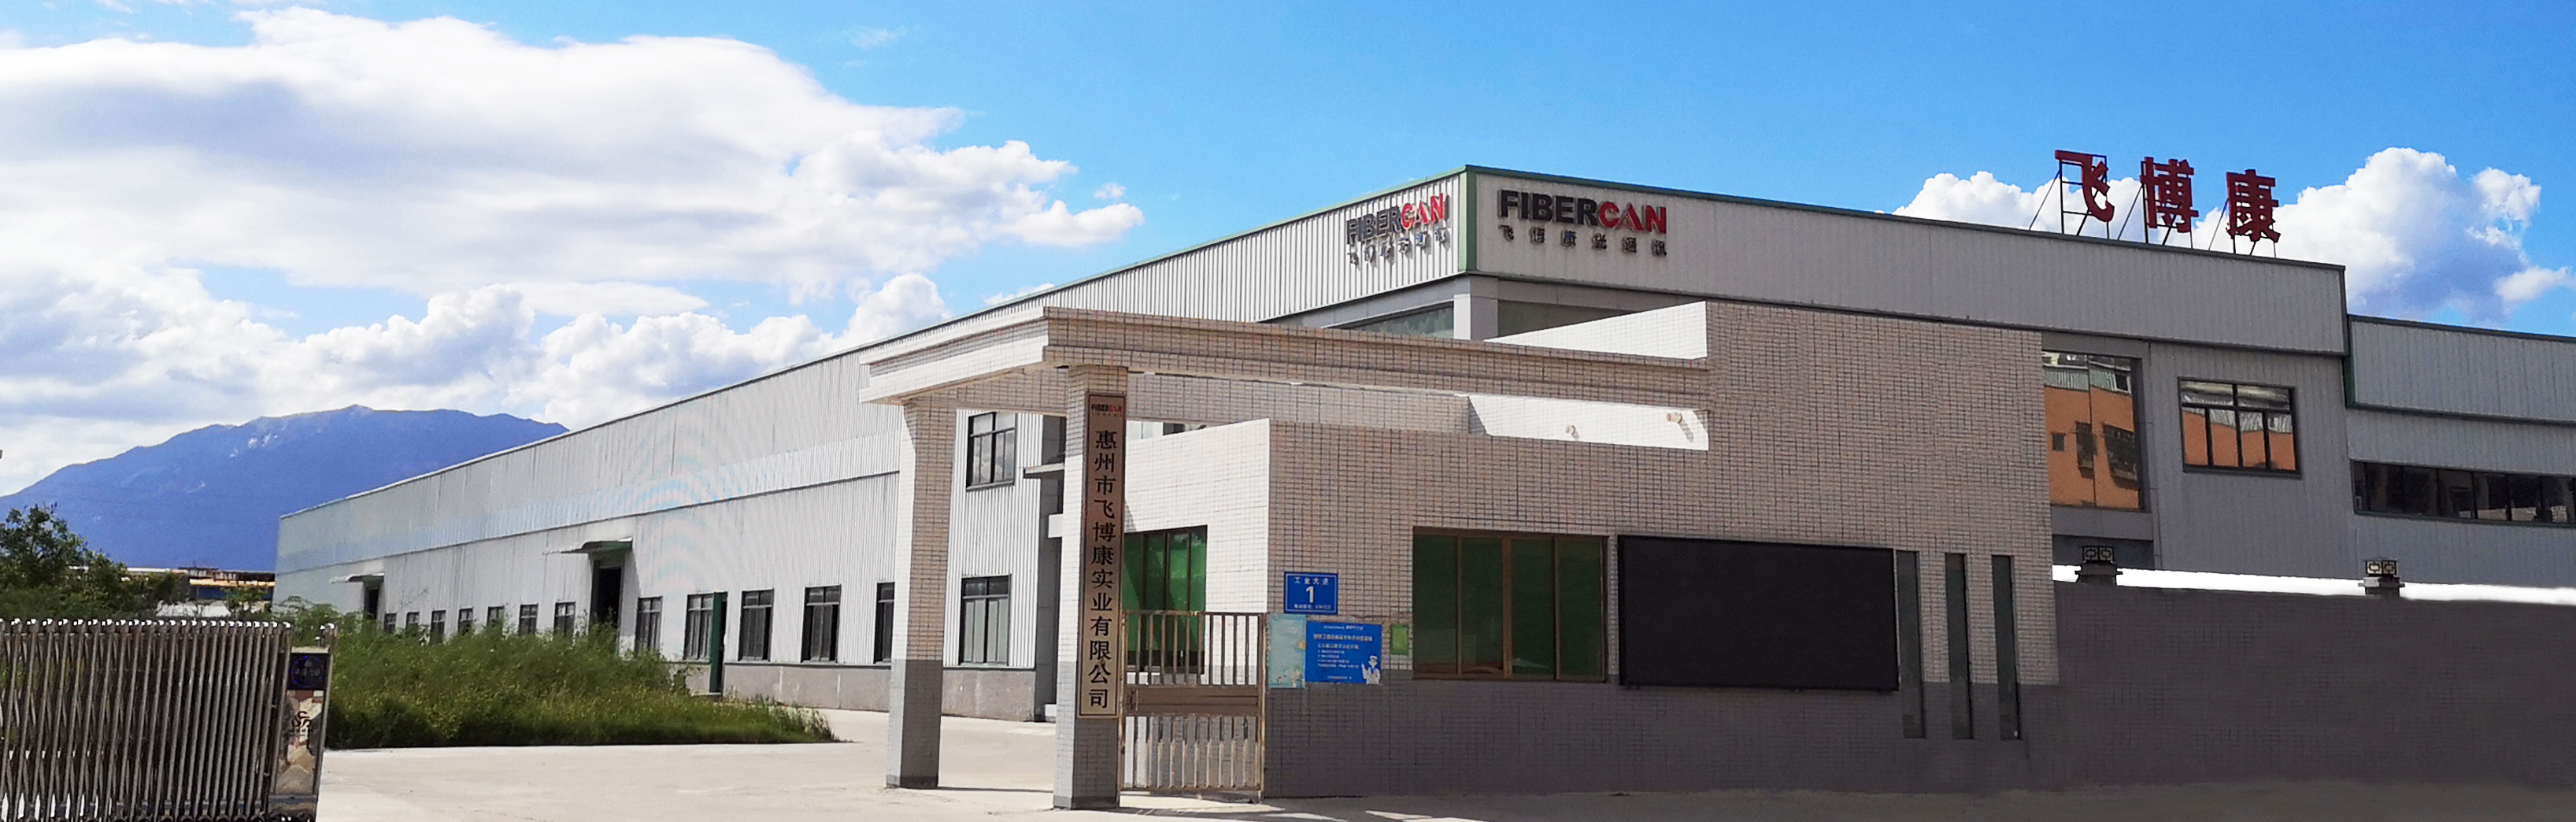 Fibercan Industrial Co., Ltd